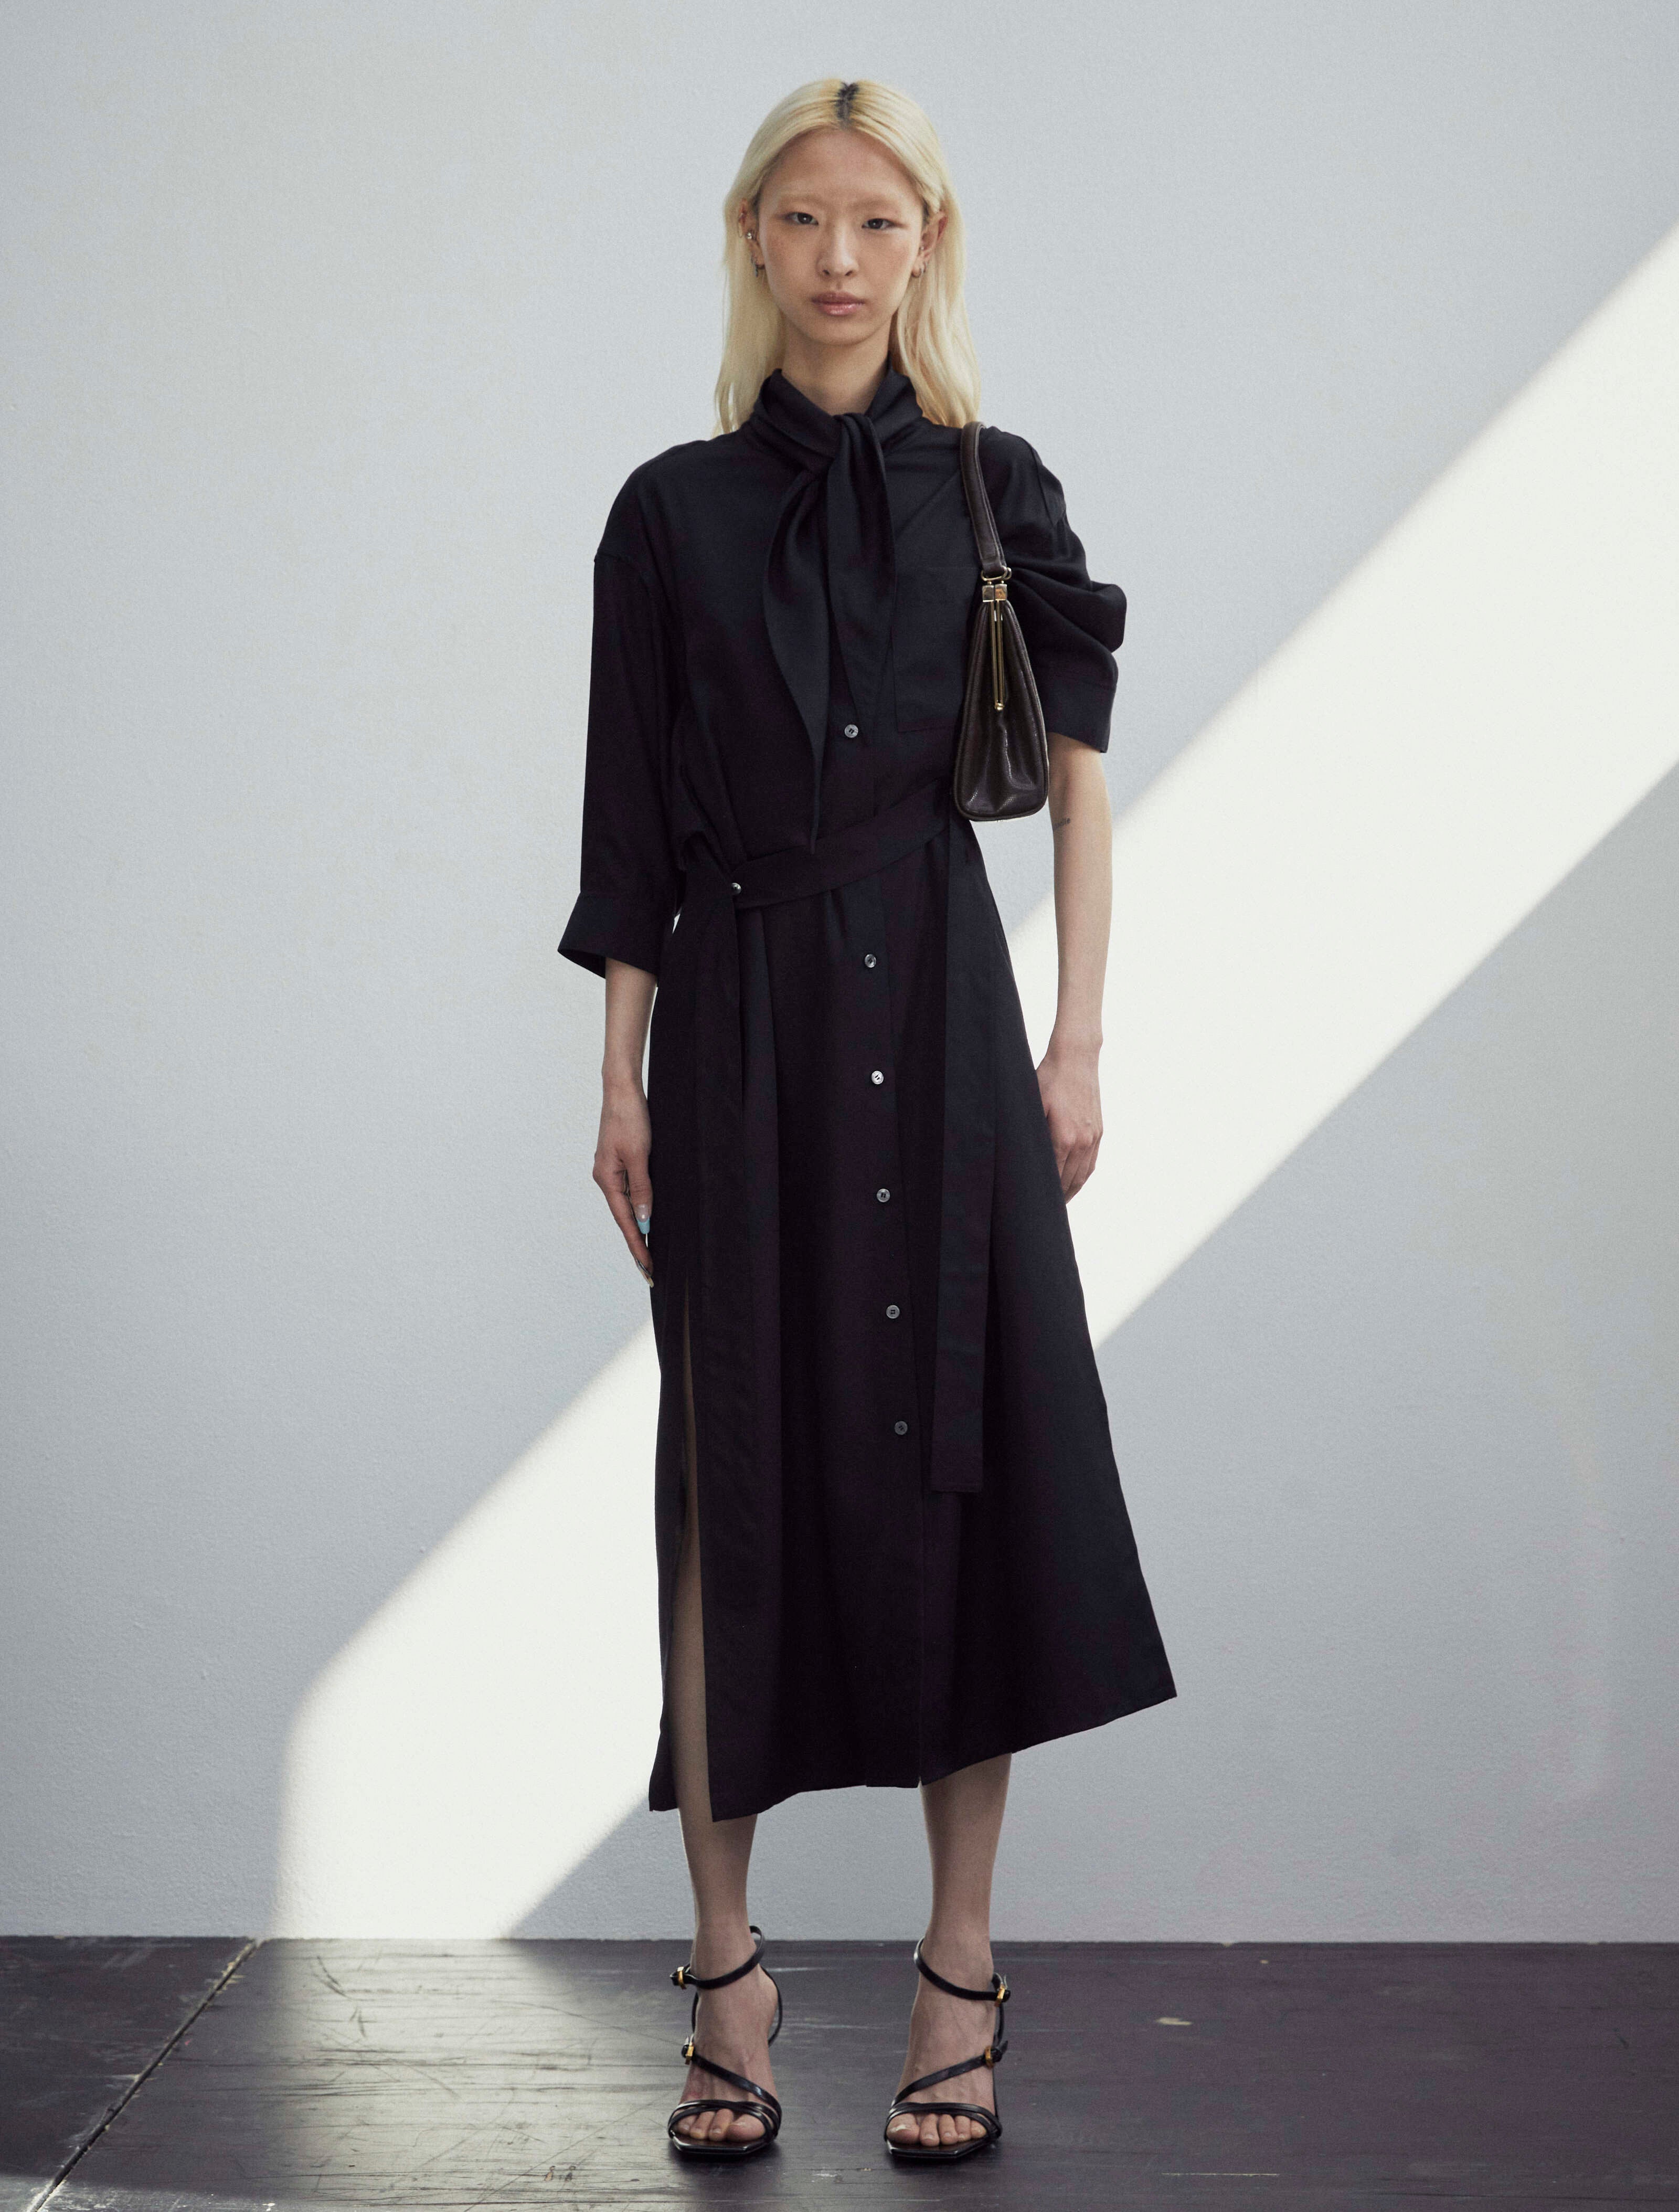 Ninety Percent Argyl Dress in Black